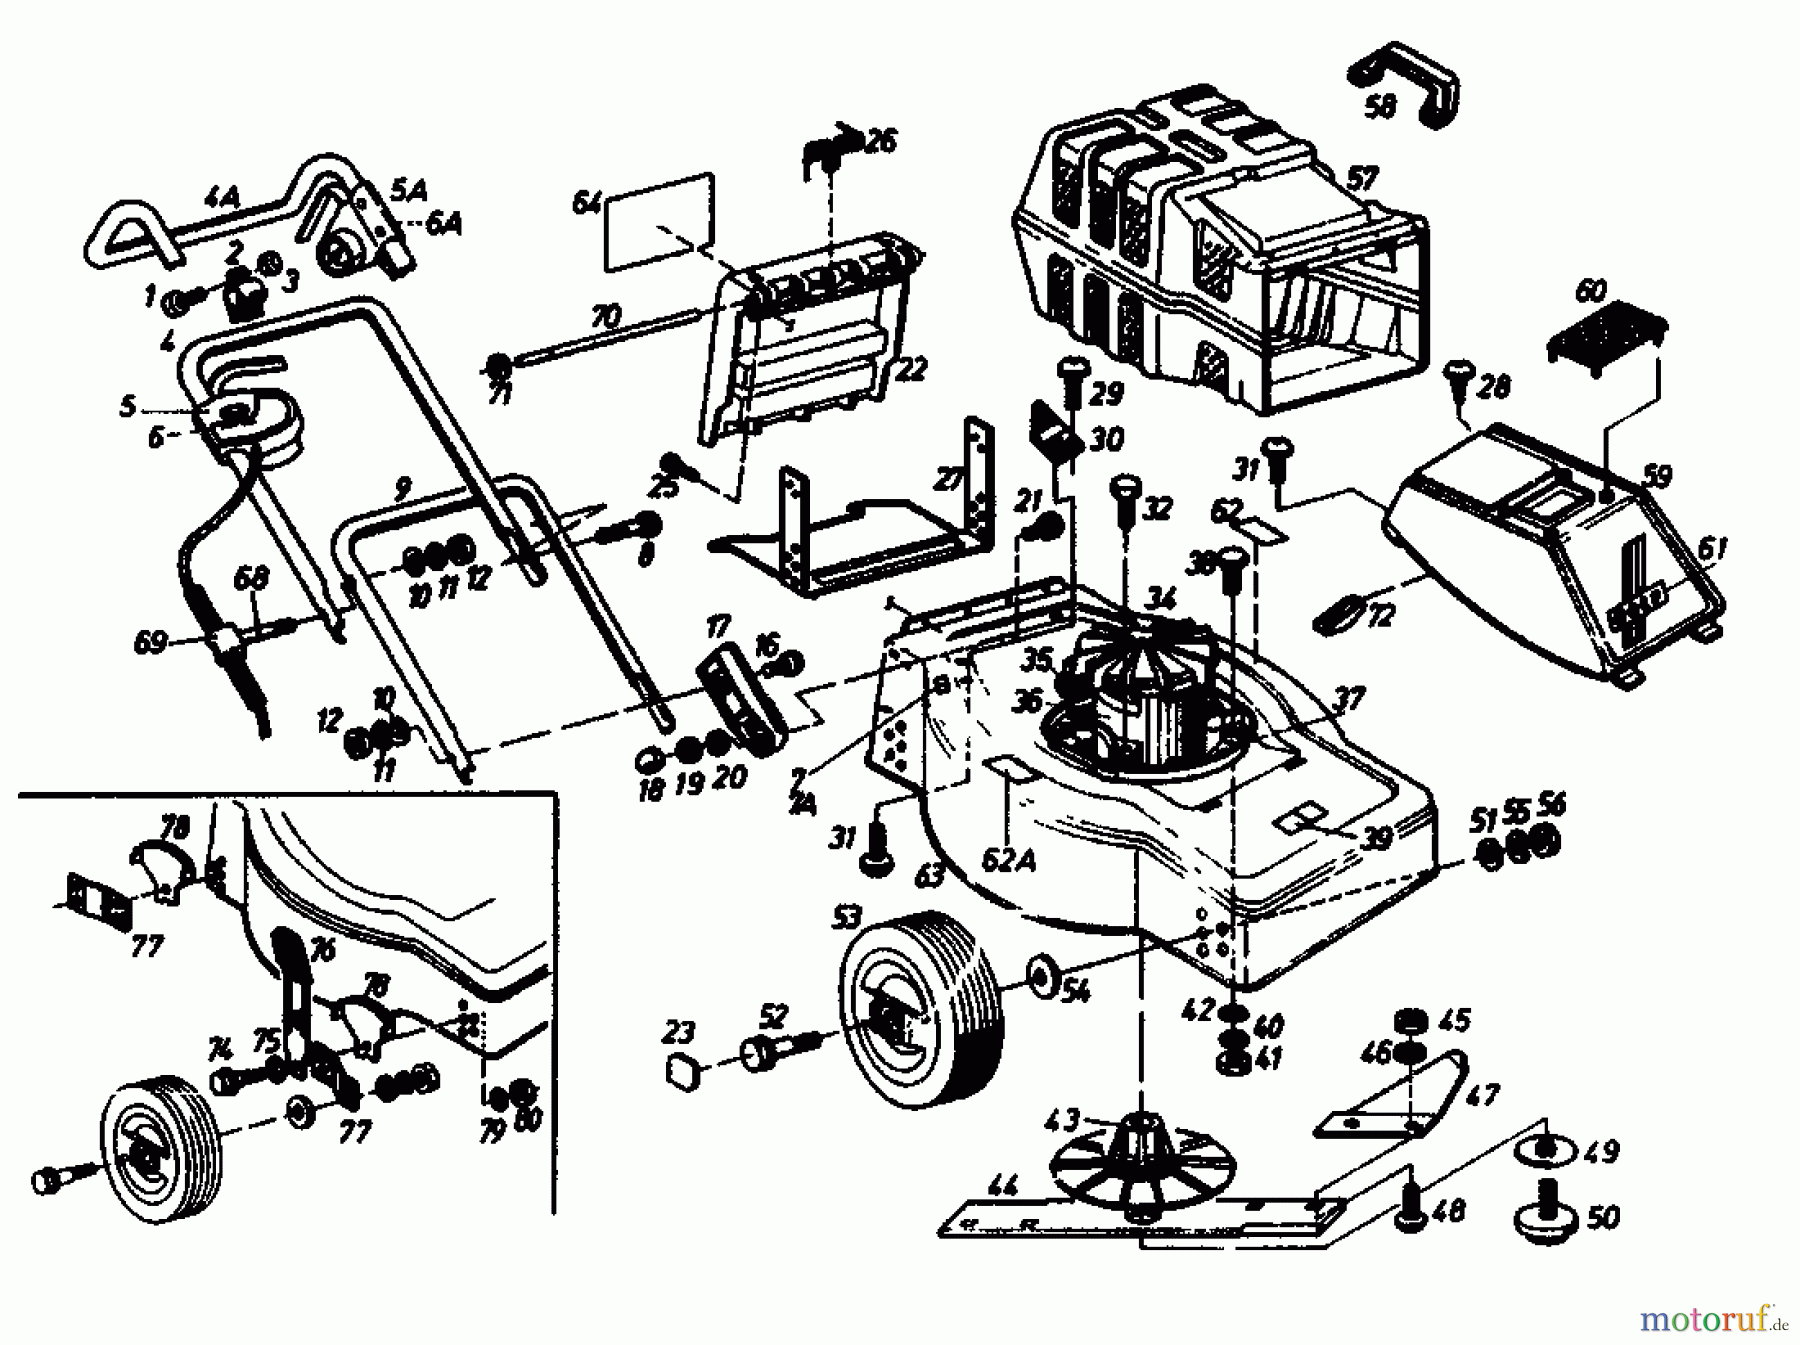  Golf Electric mower E 02881.01  (1989) Basic machine